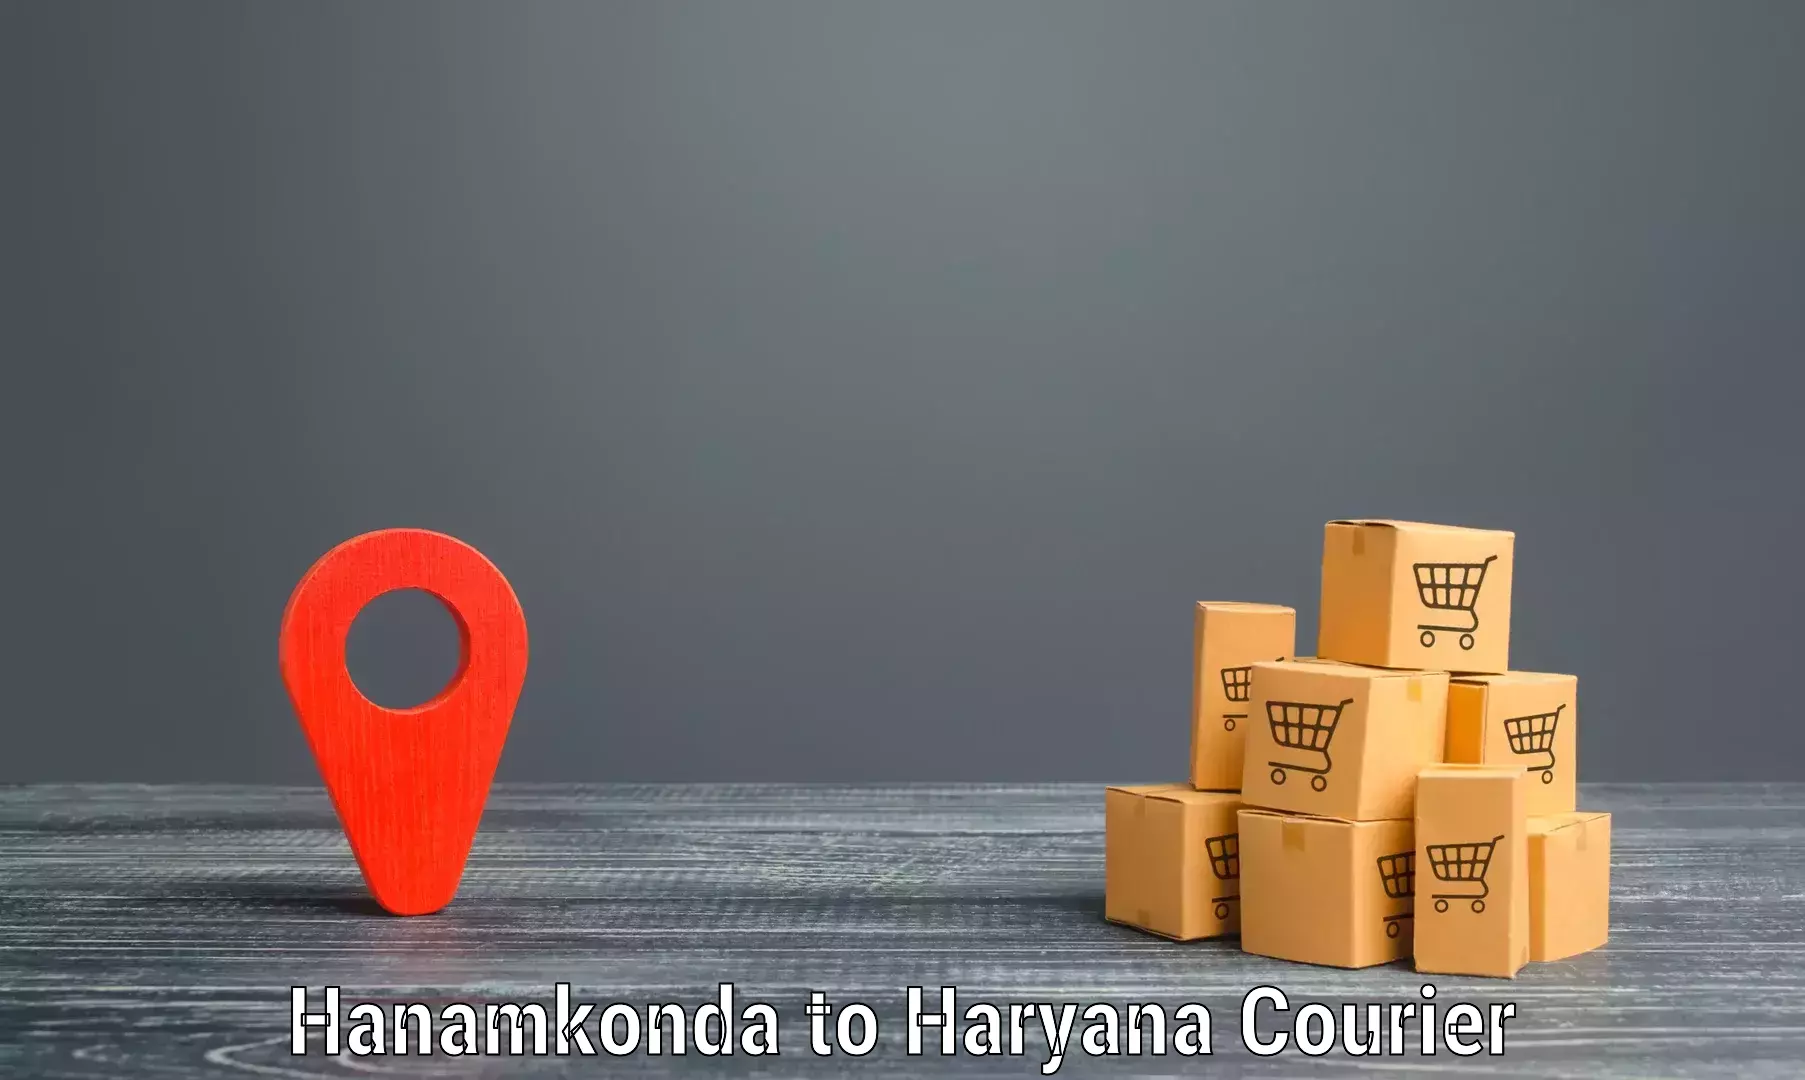 User-friendly delivery service Hanamkonda to Chirya